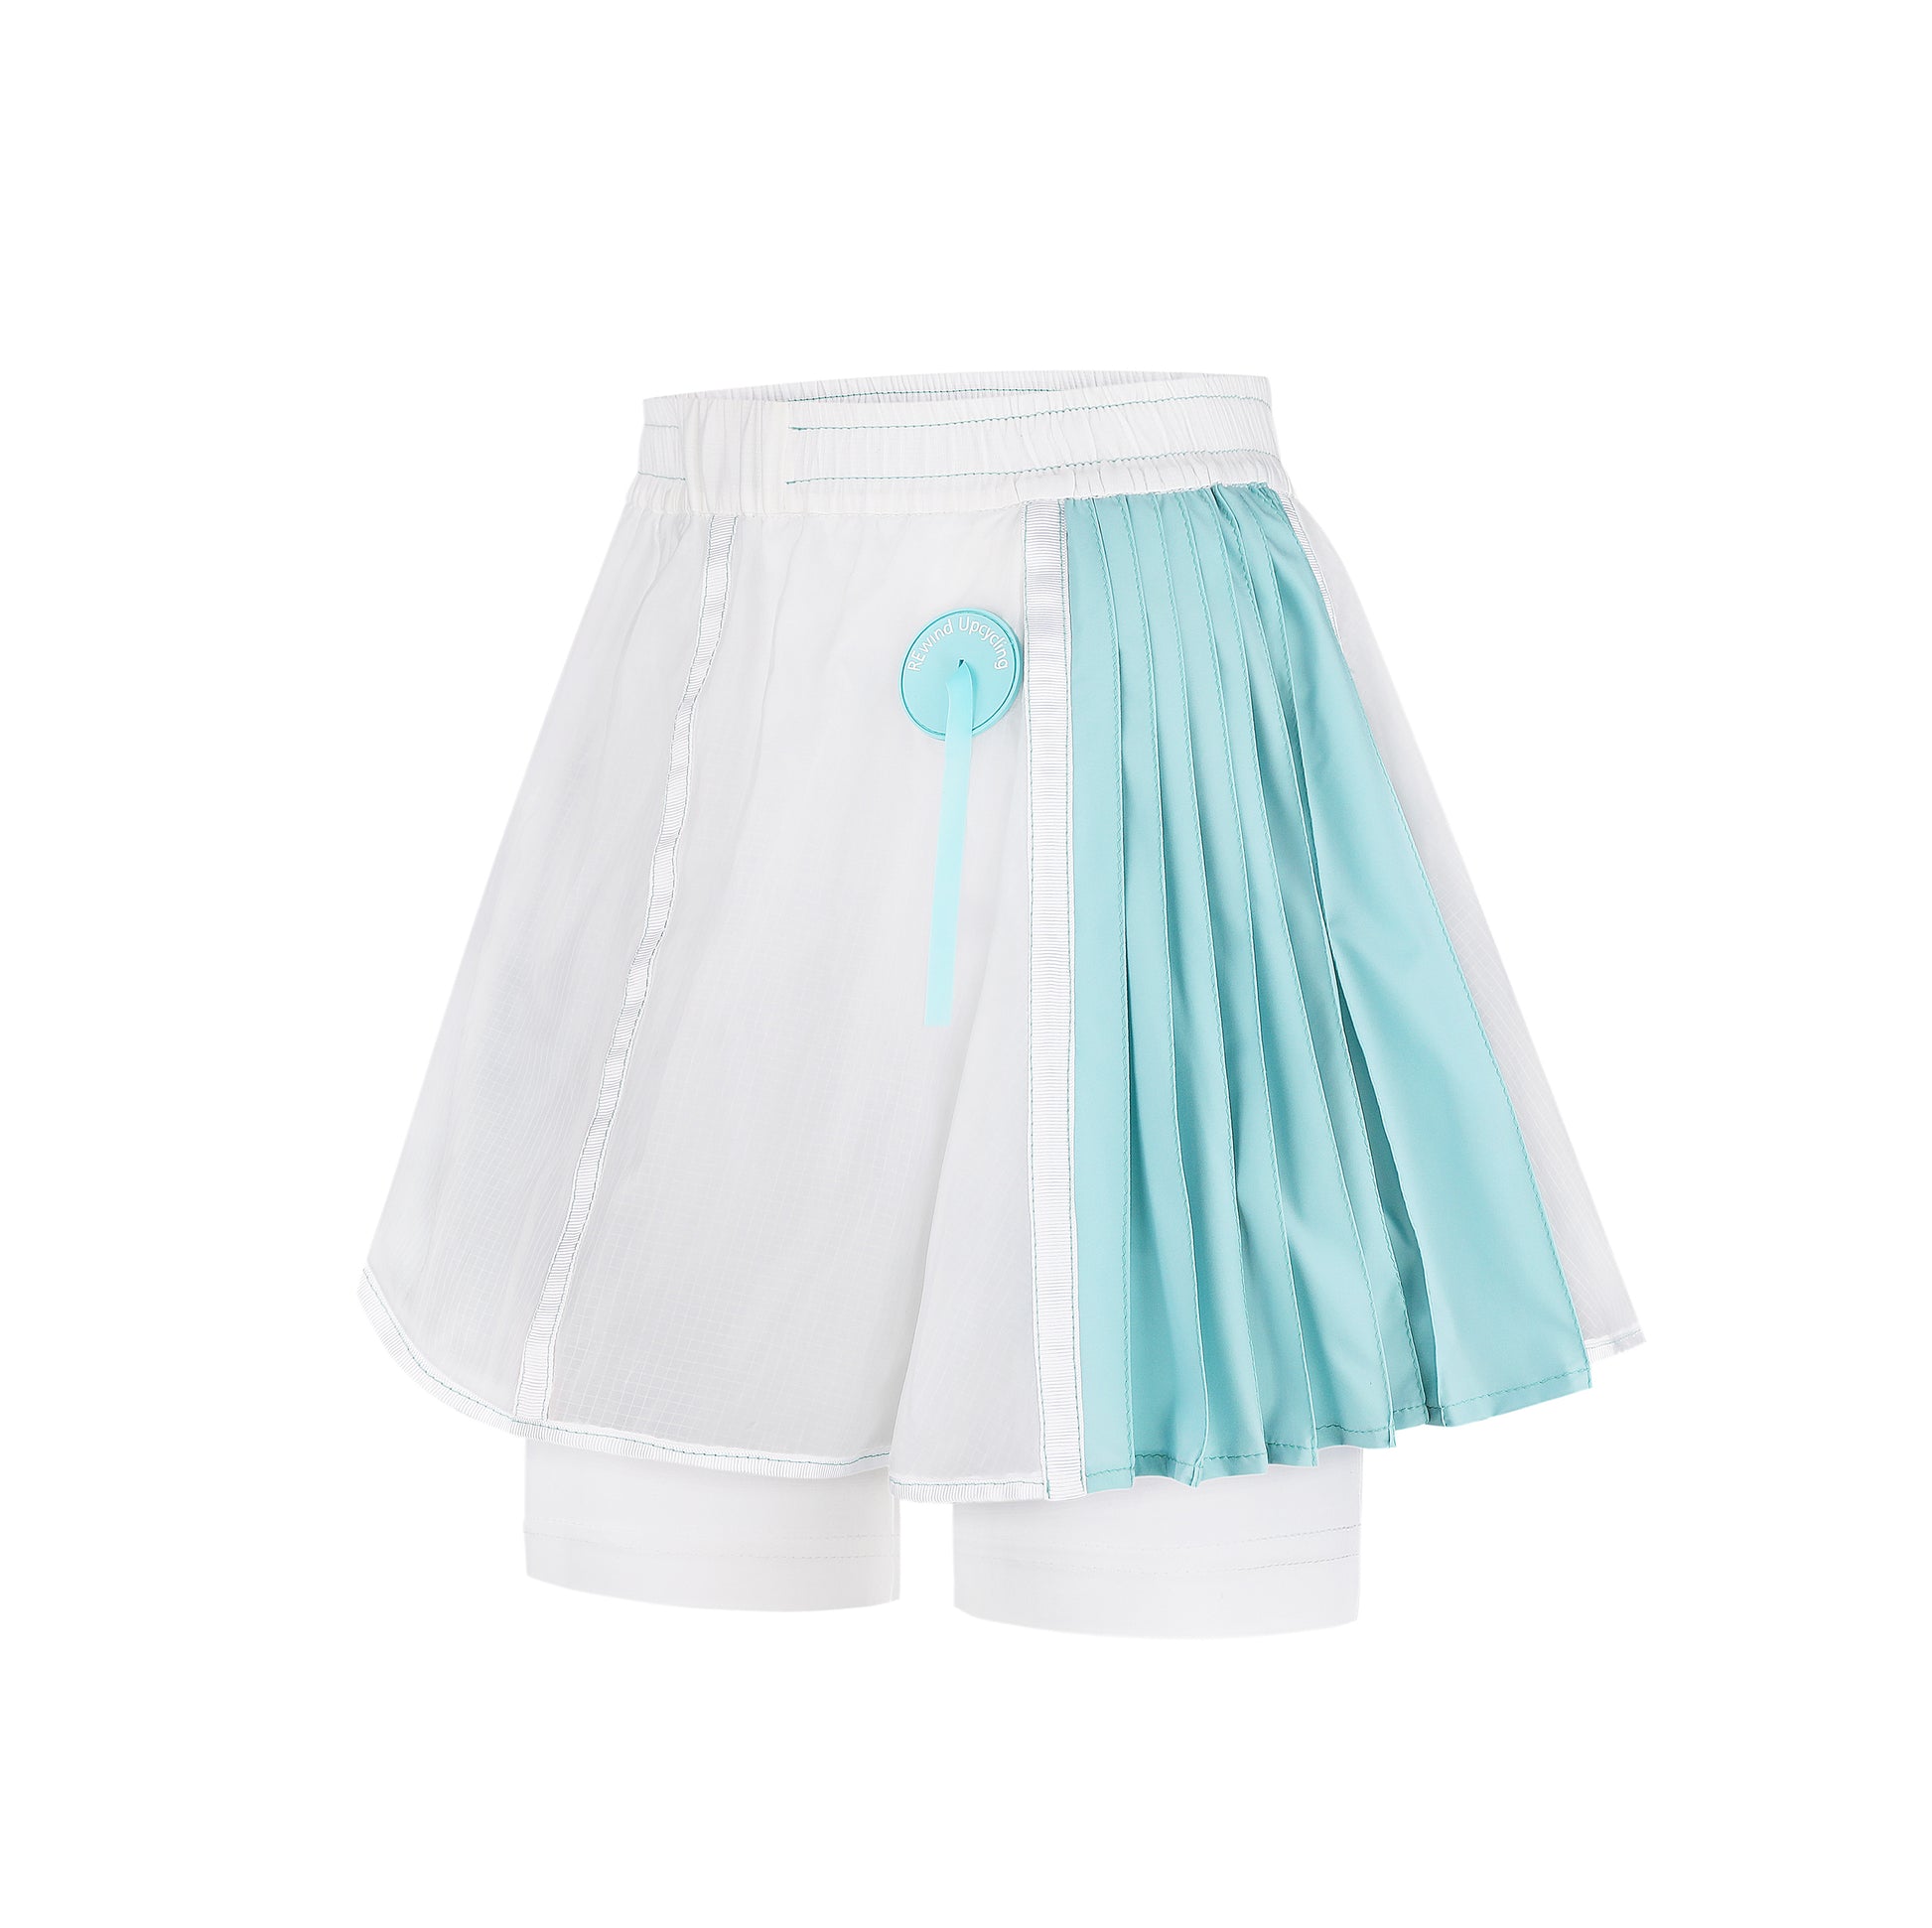 Designer tennis sport skirt shorts: white & tiffany colour